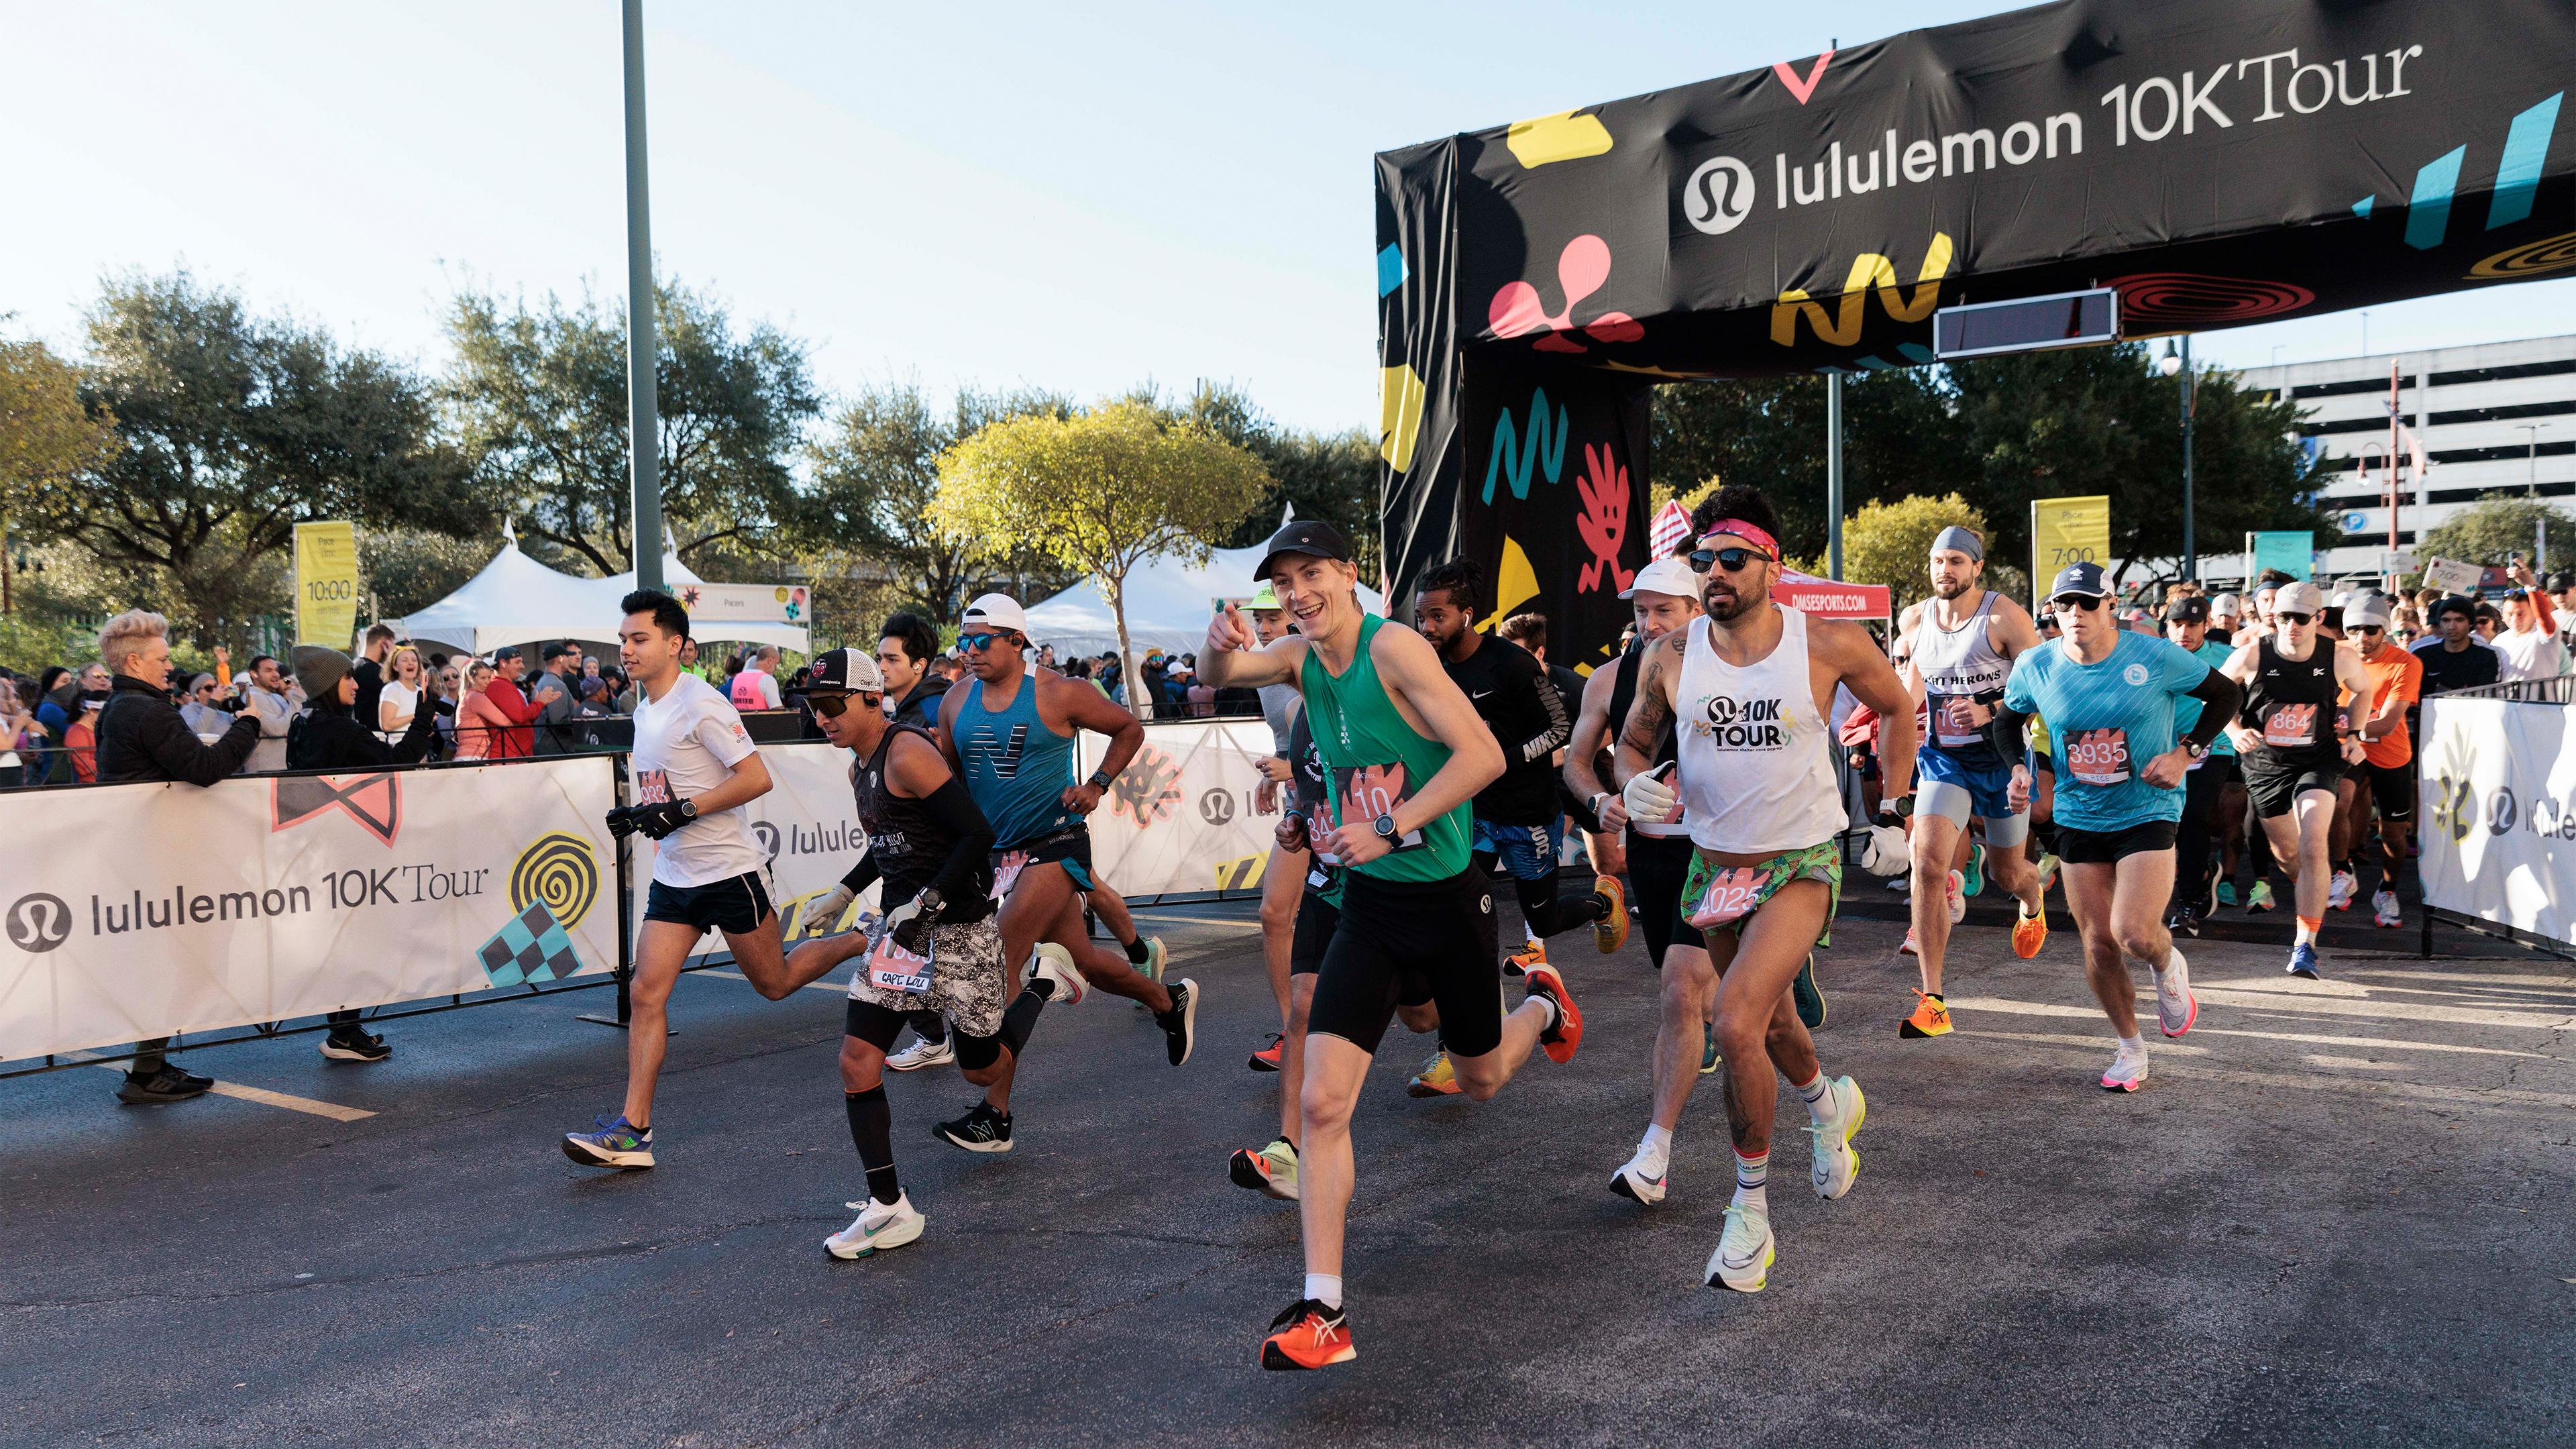 Atlanta runners start the party at the Lululemon 10k Tour - Running USA